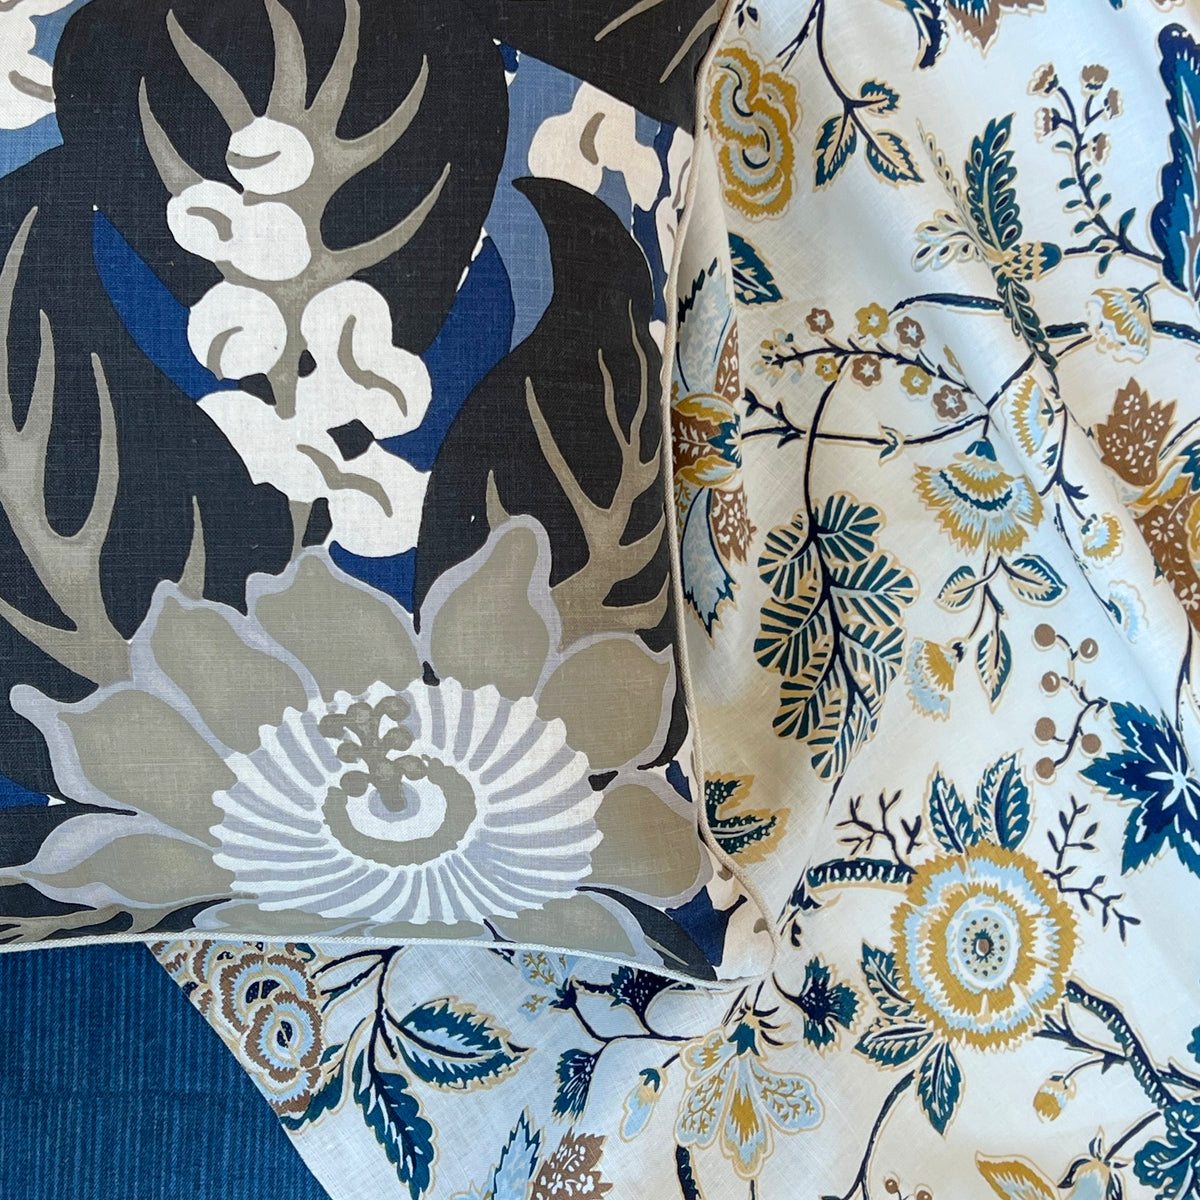 Floral Desert Flowers On Denim Blue Fabric By The Yard - Desert